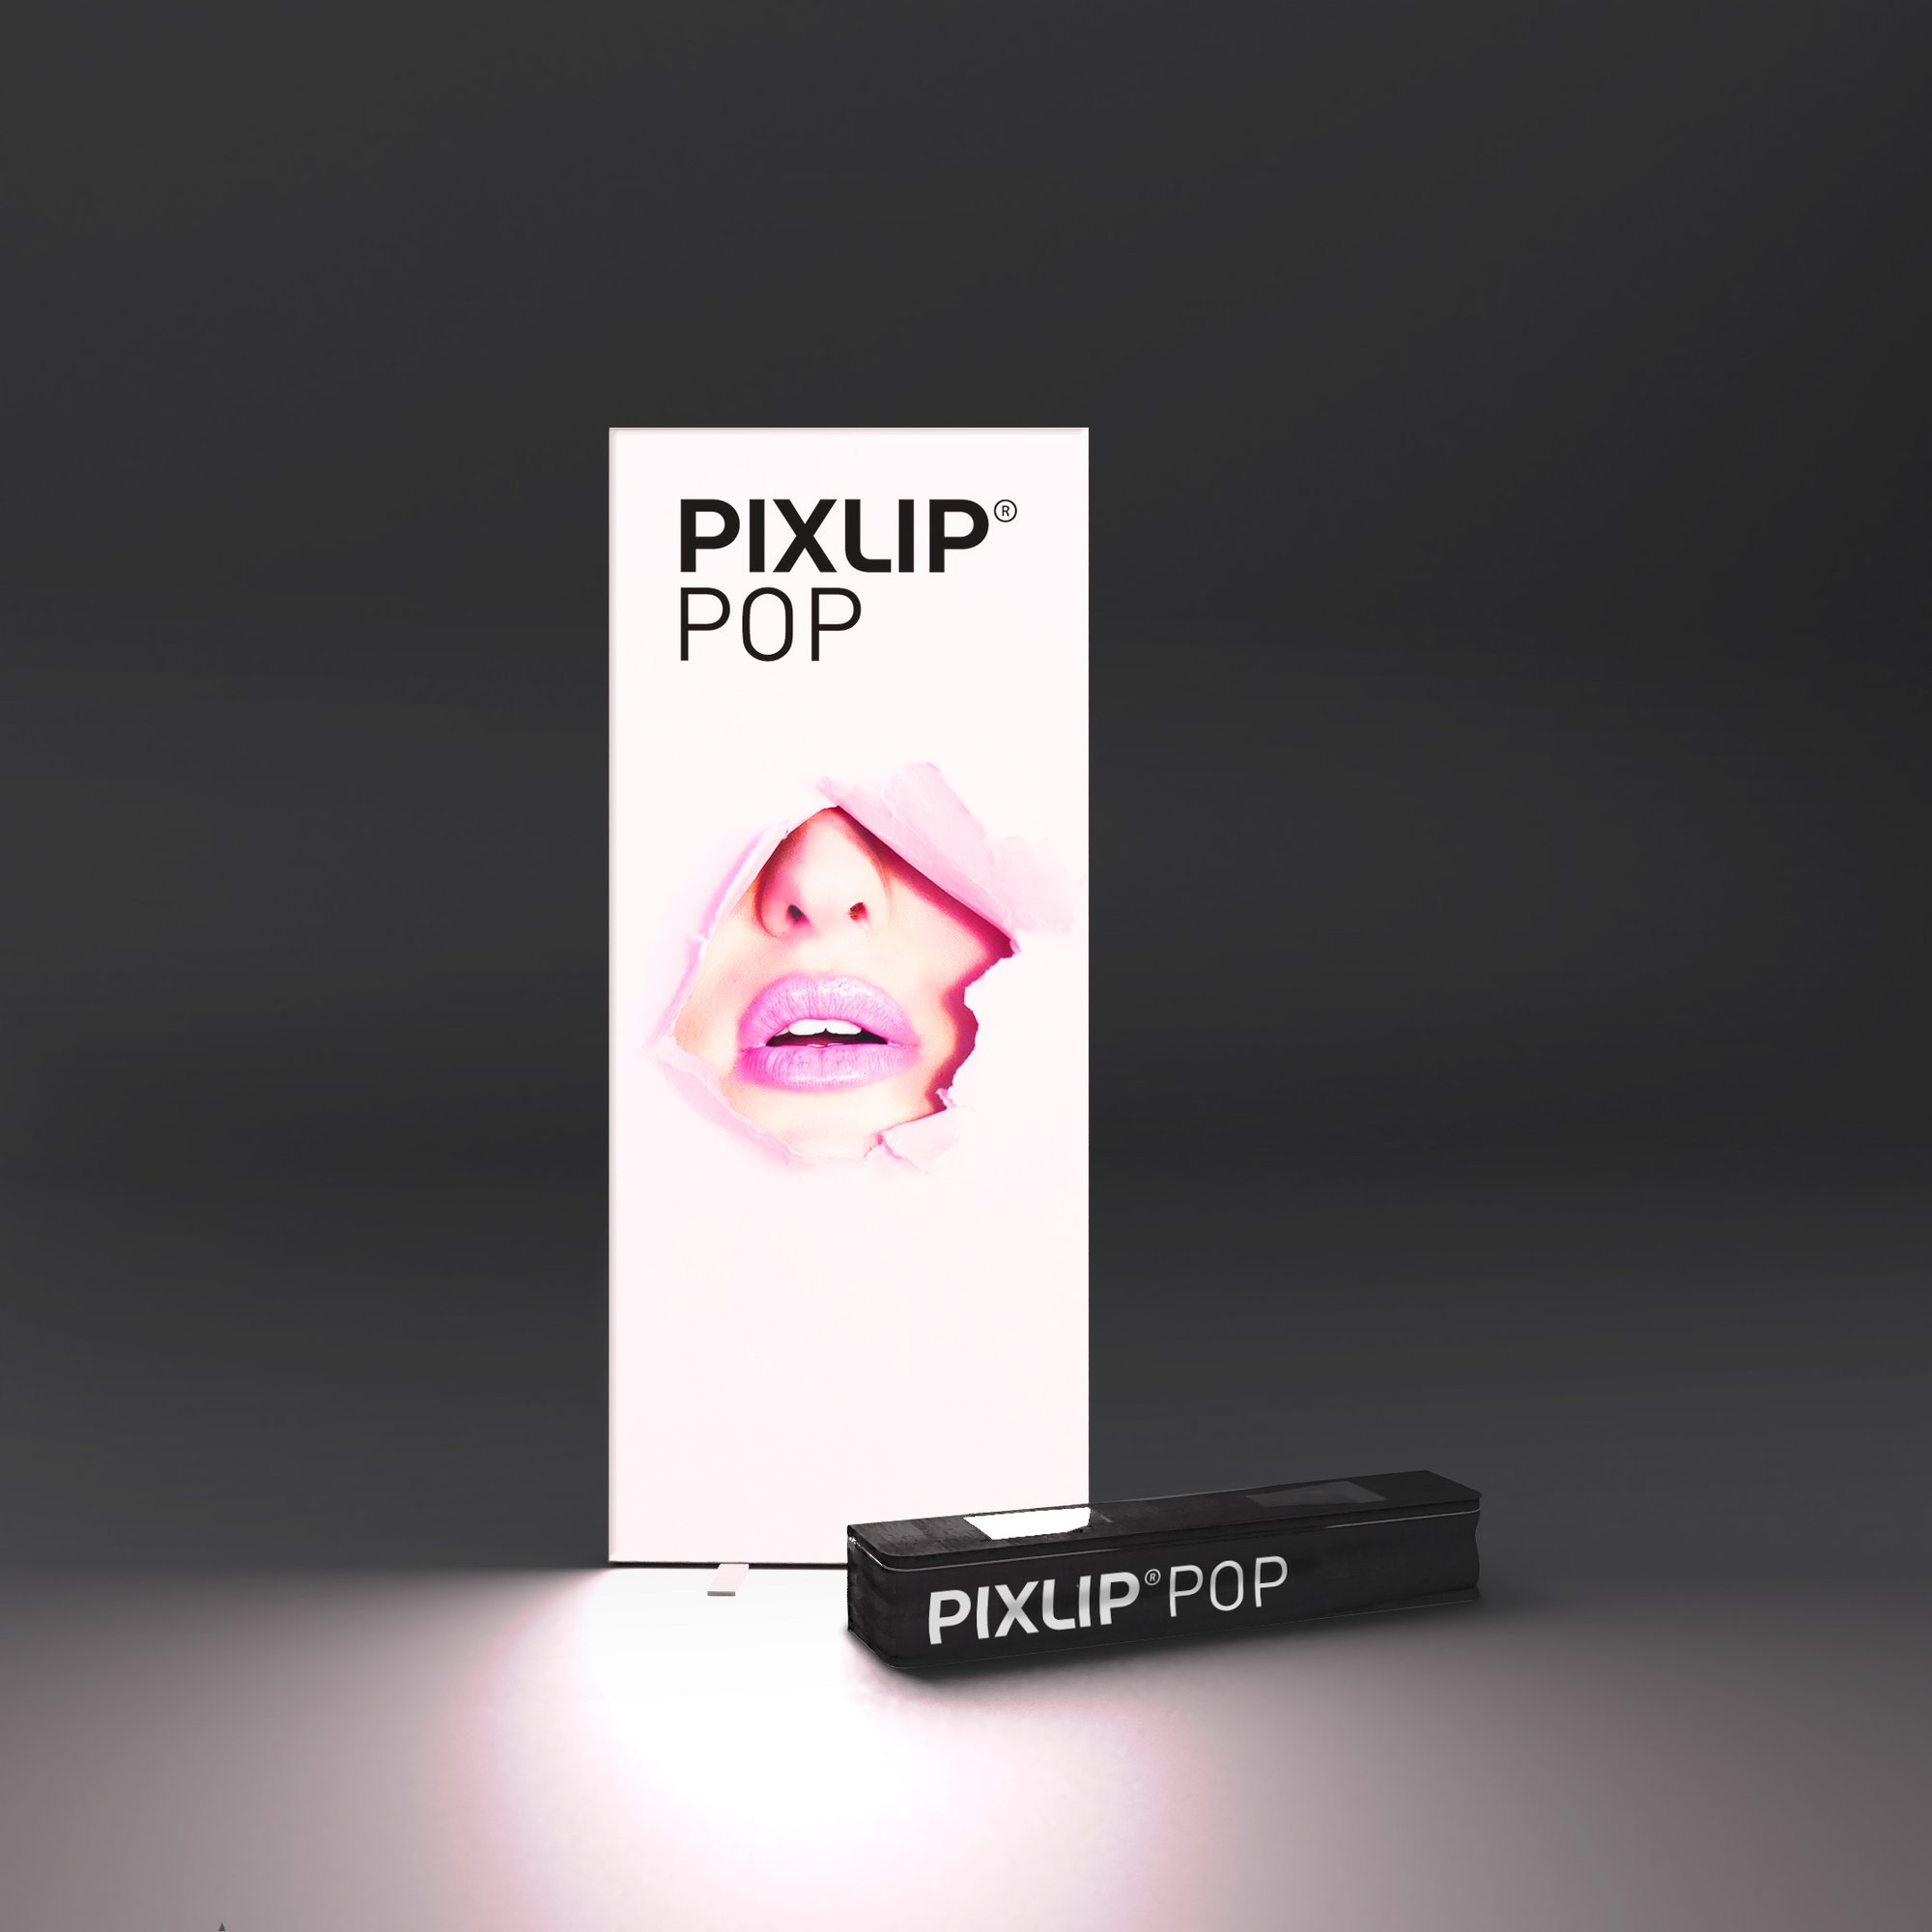 Pixlip POP exhibition system